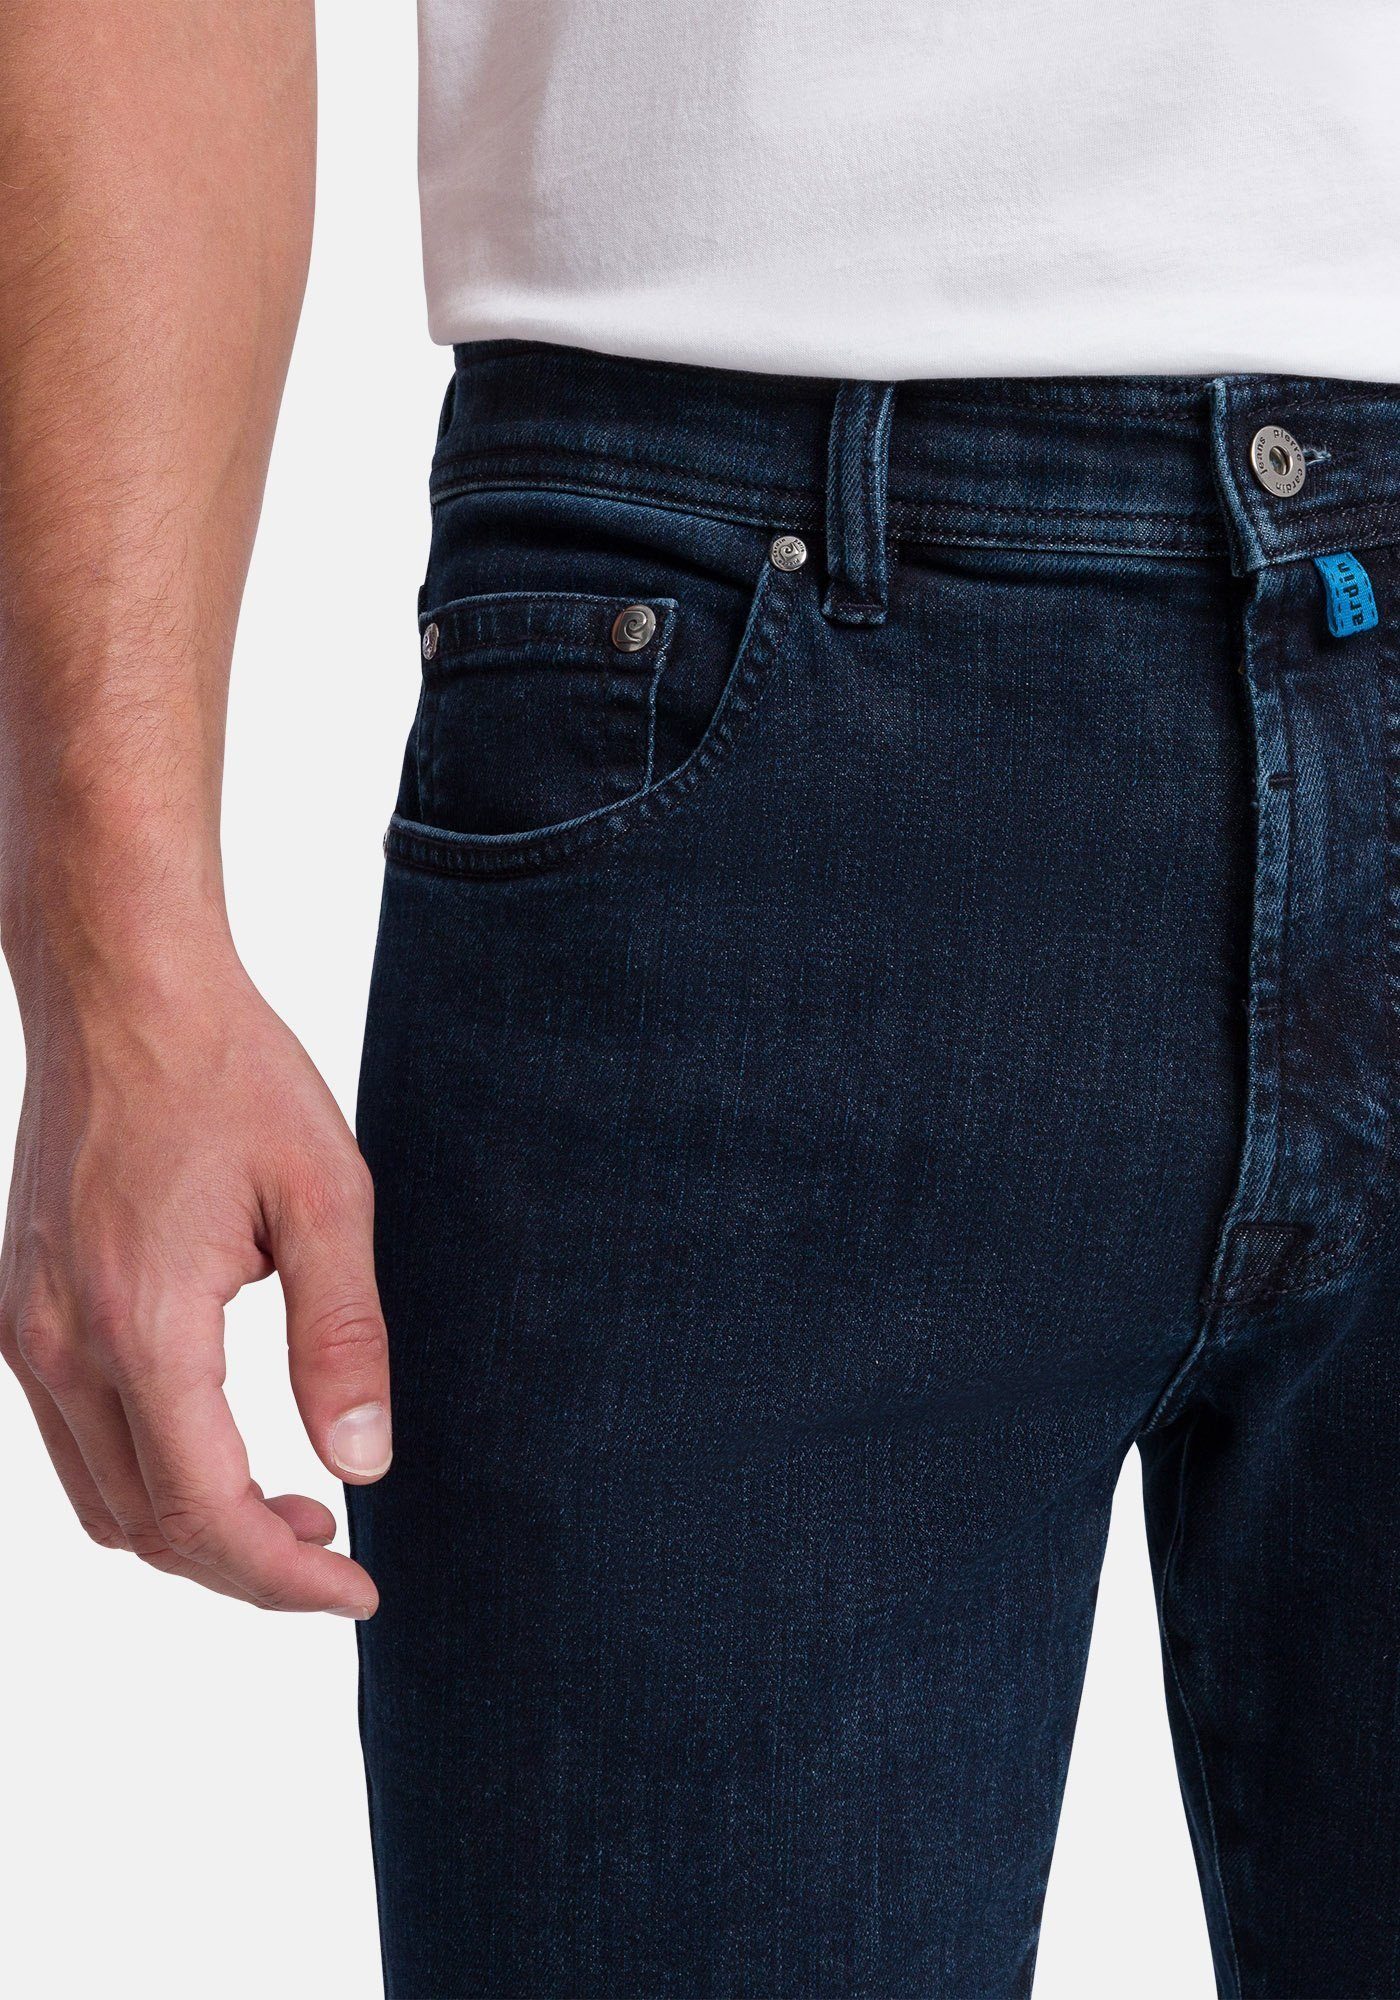 Pierre Cardin 5-Pocket-Jeans stonewash Stretch Rivet Comfort Dijon dark Fit Green blue Denim